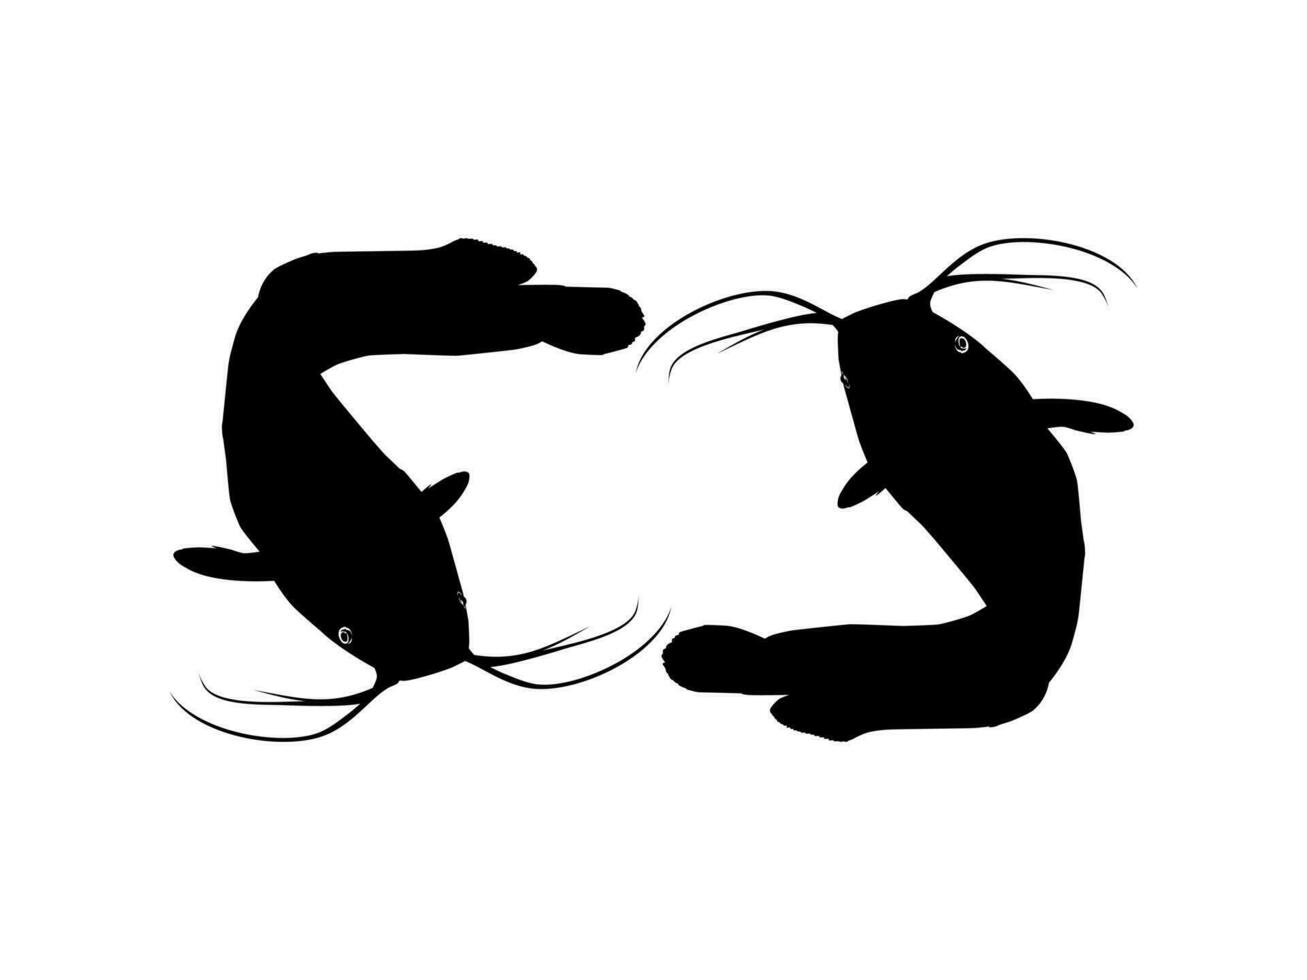 Pair of the Catfish Silhouette for Logo type, Art Illustration, Apps, Website, Pictogram or Graphic Design Element. Vector Illustration